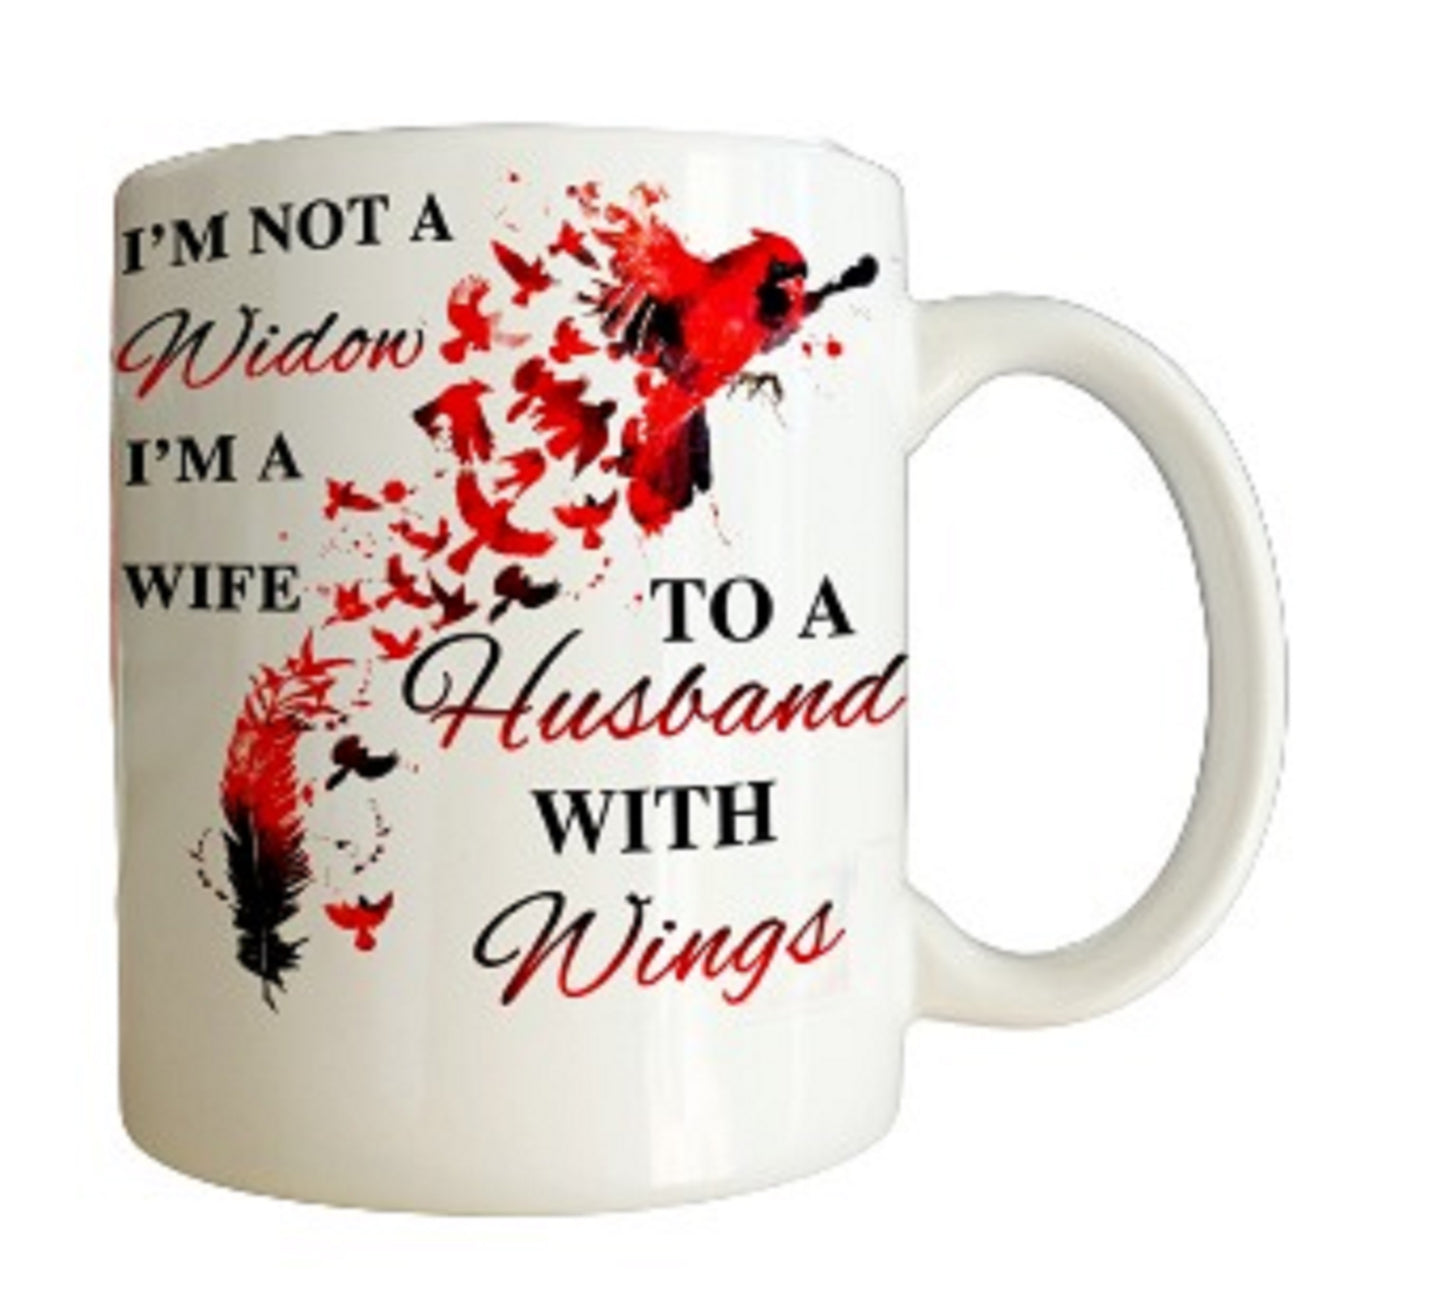  I'm Not A Widow Coffee Mug by Free Spirit Accessories sold by Free Spirit Accessories